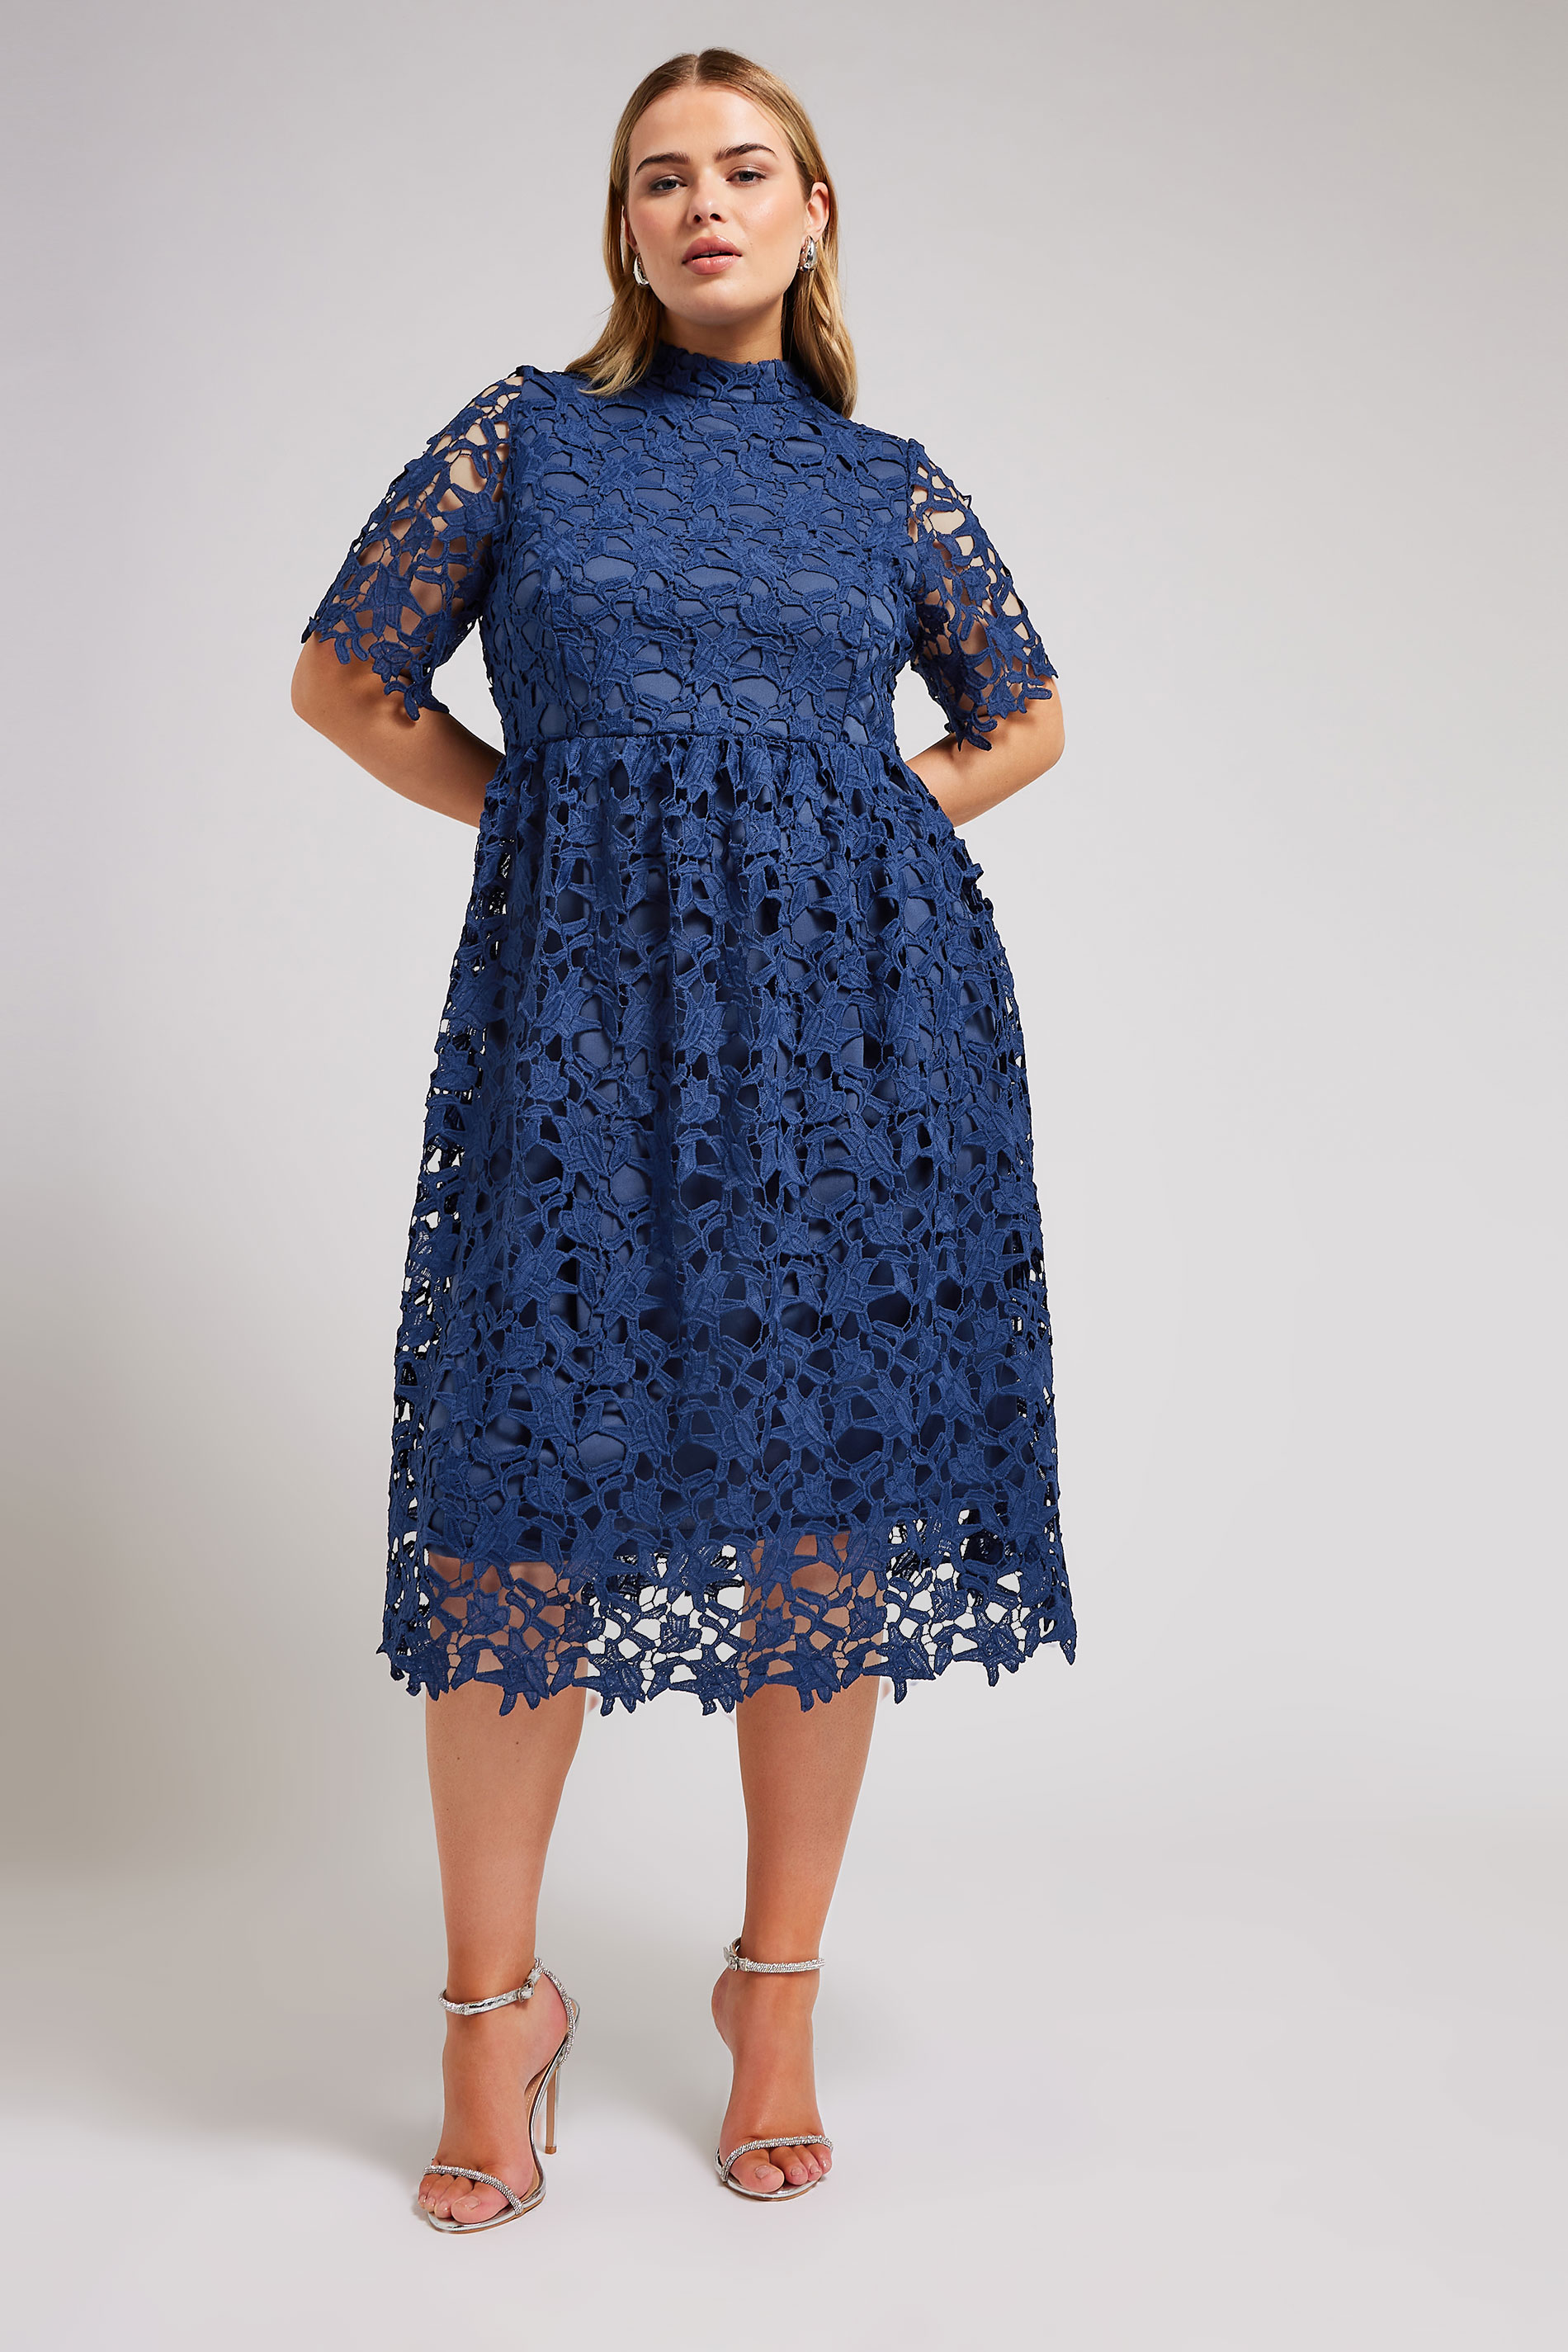 YOURS LONDON Plus Size Blue Crochet Lace Midi Dress | Yours Clothing 3